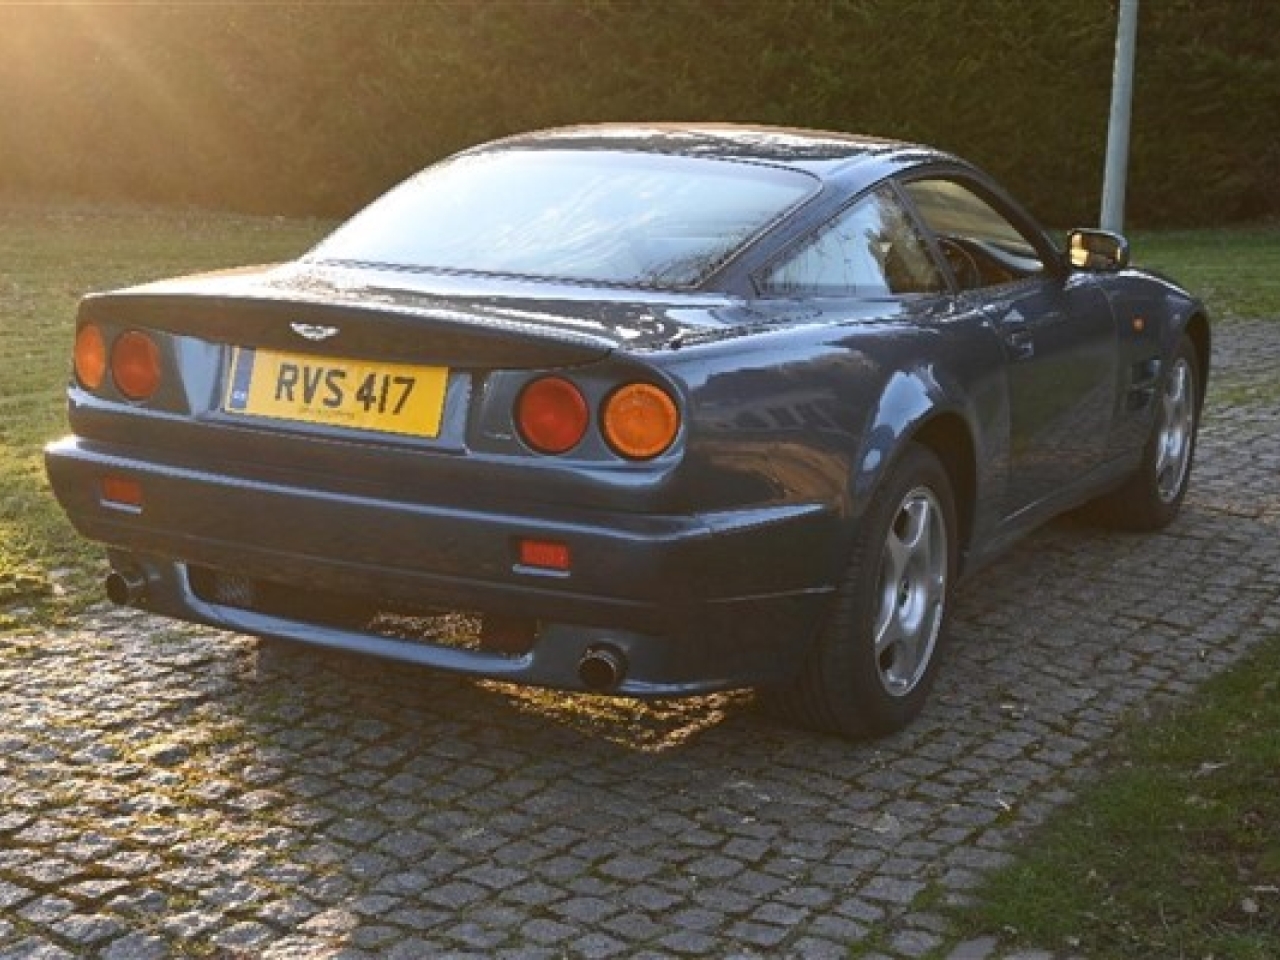 1998 Aston Martin V600